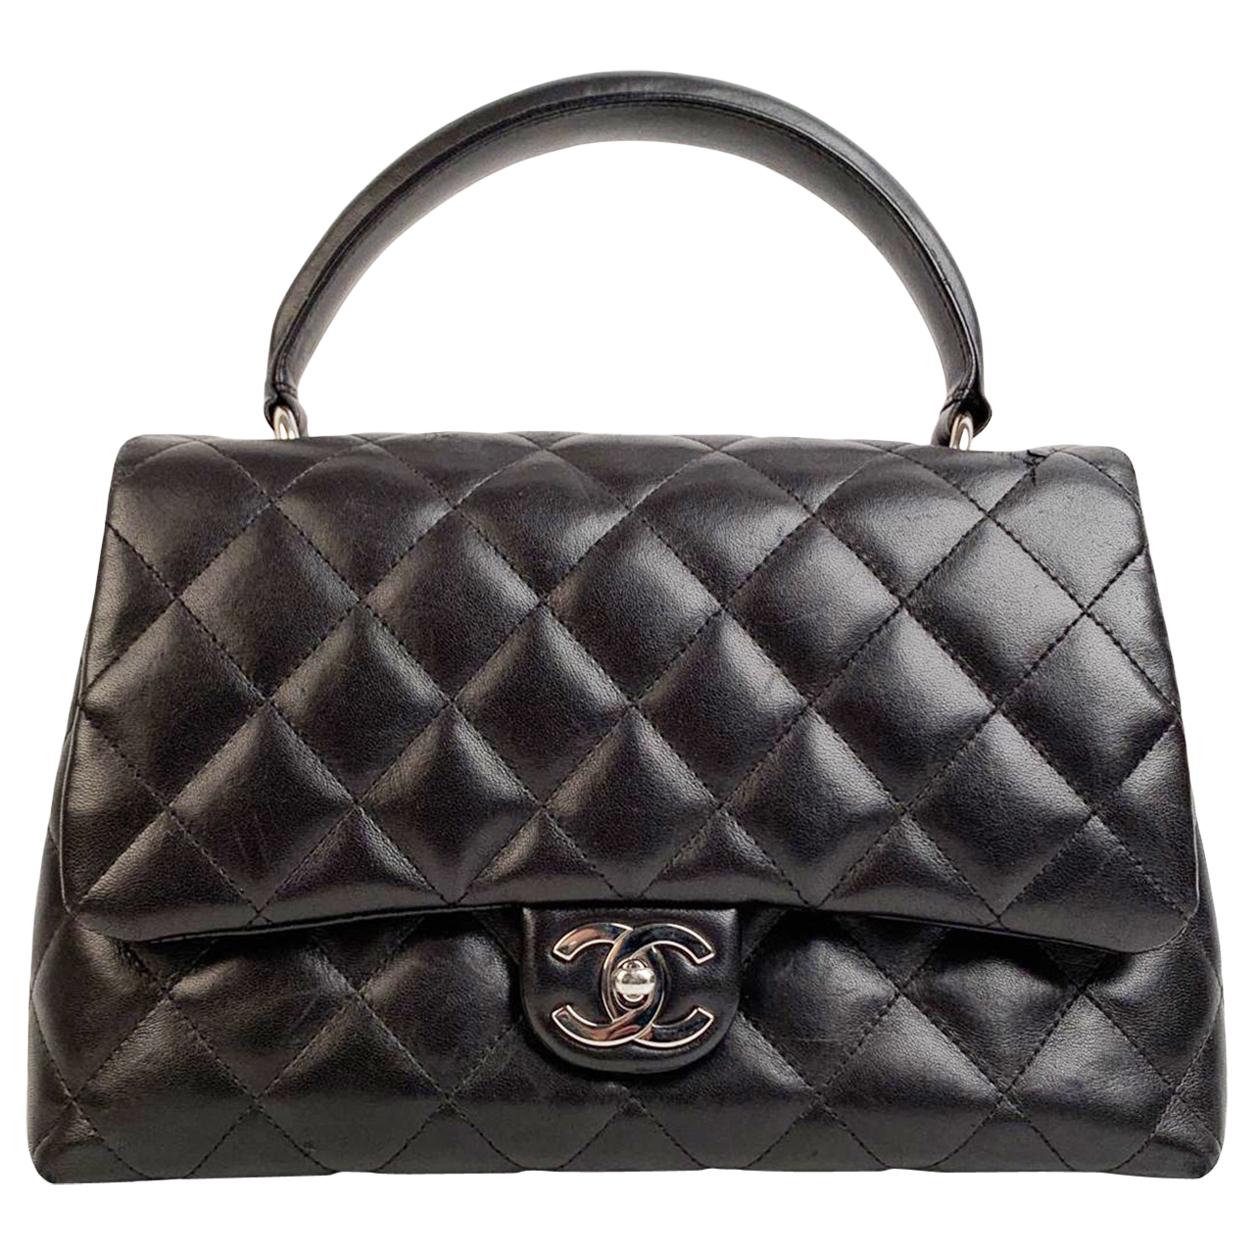 Chanel Black Quilted Leather Kelly Top Handle Bag Handbag